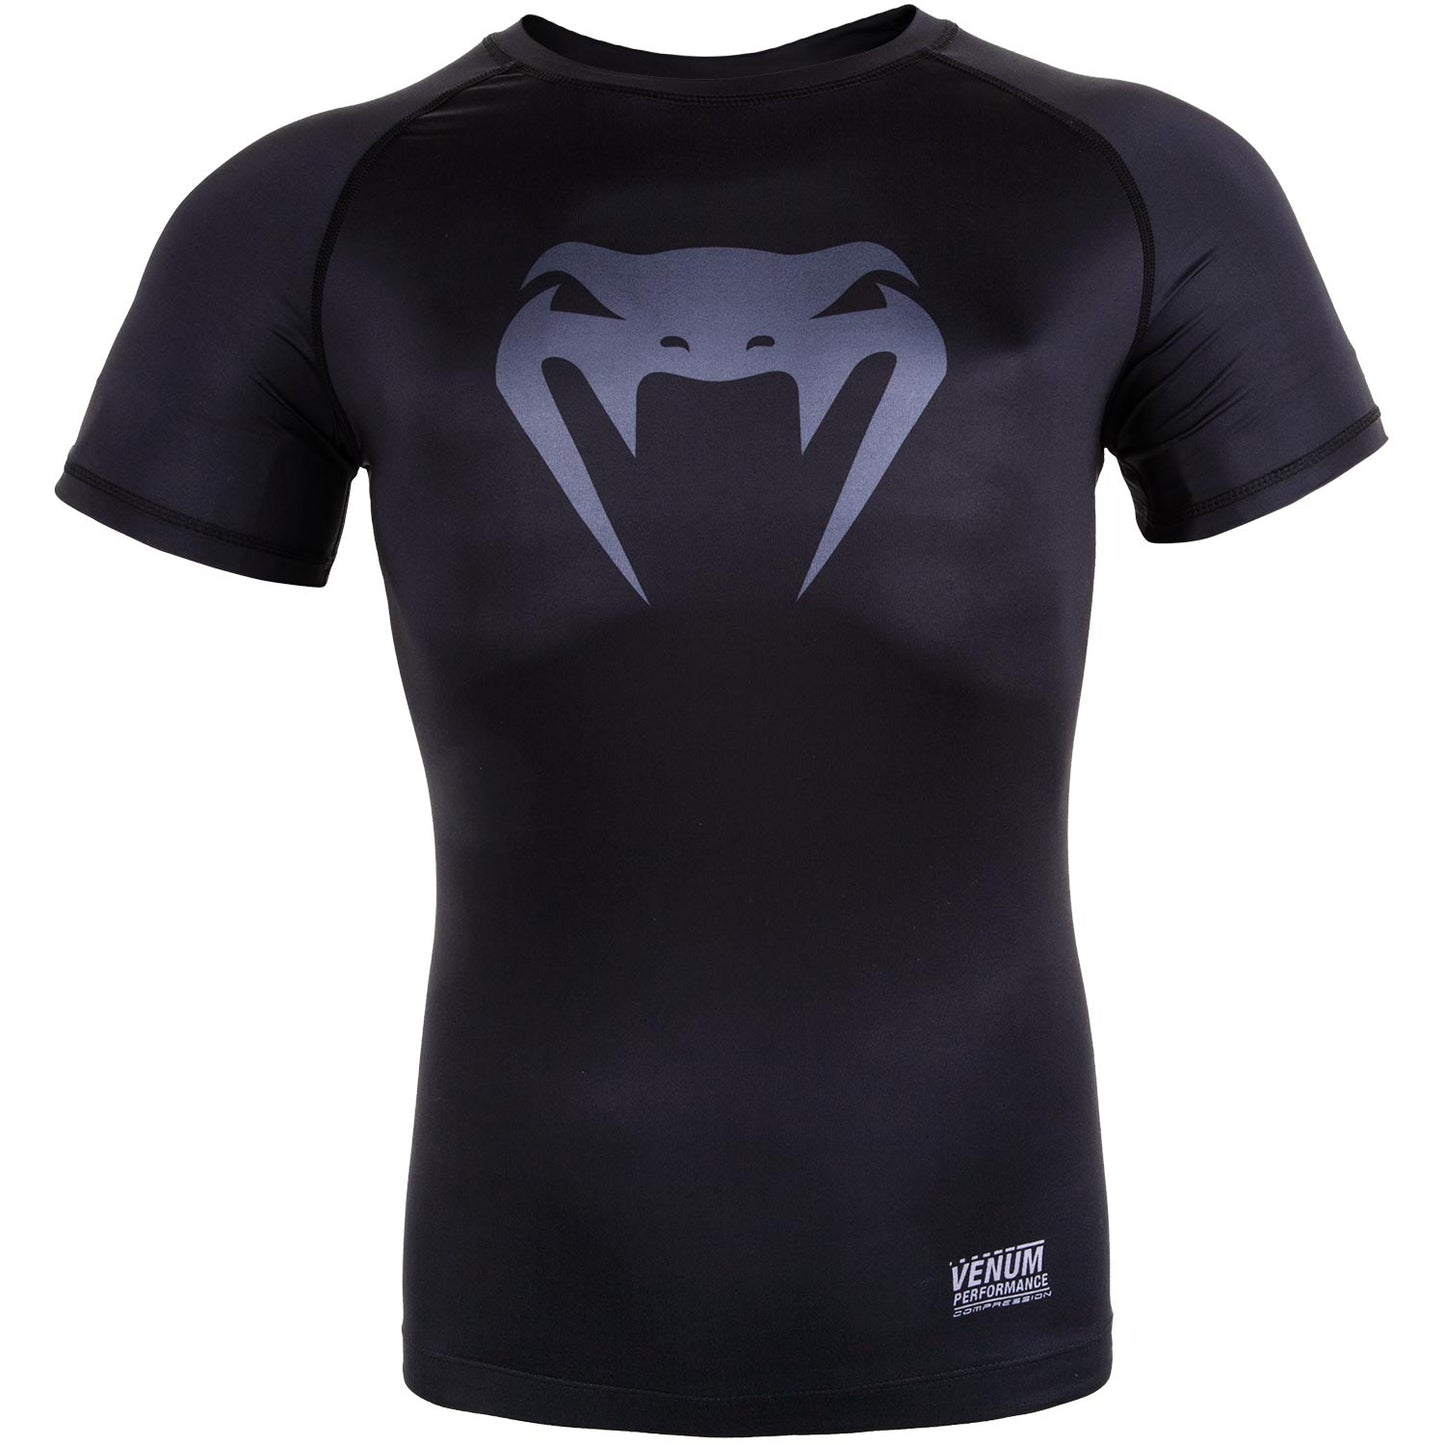 Venum Contender 3.0 Compression T-shirt - Short Sleeves - Black/Grey